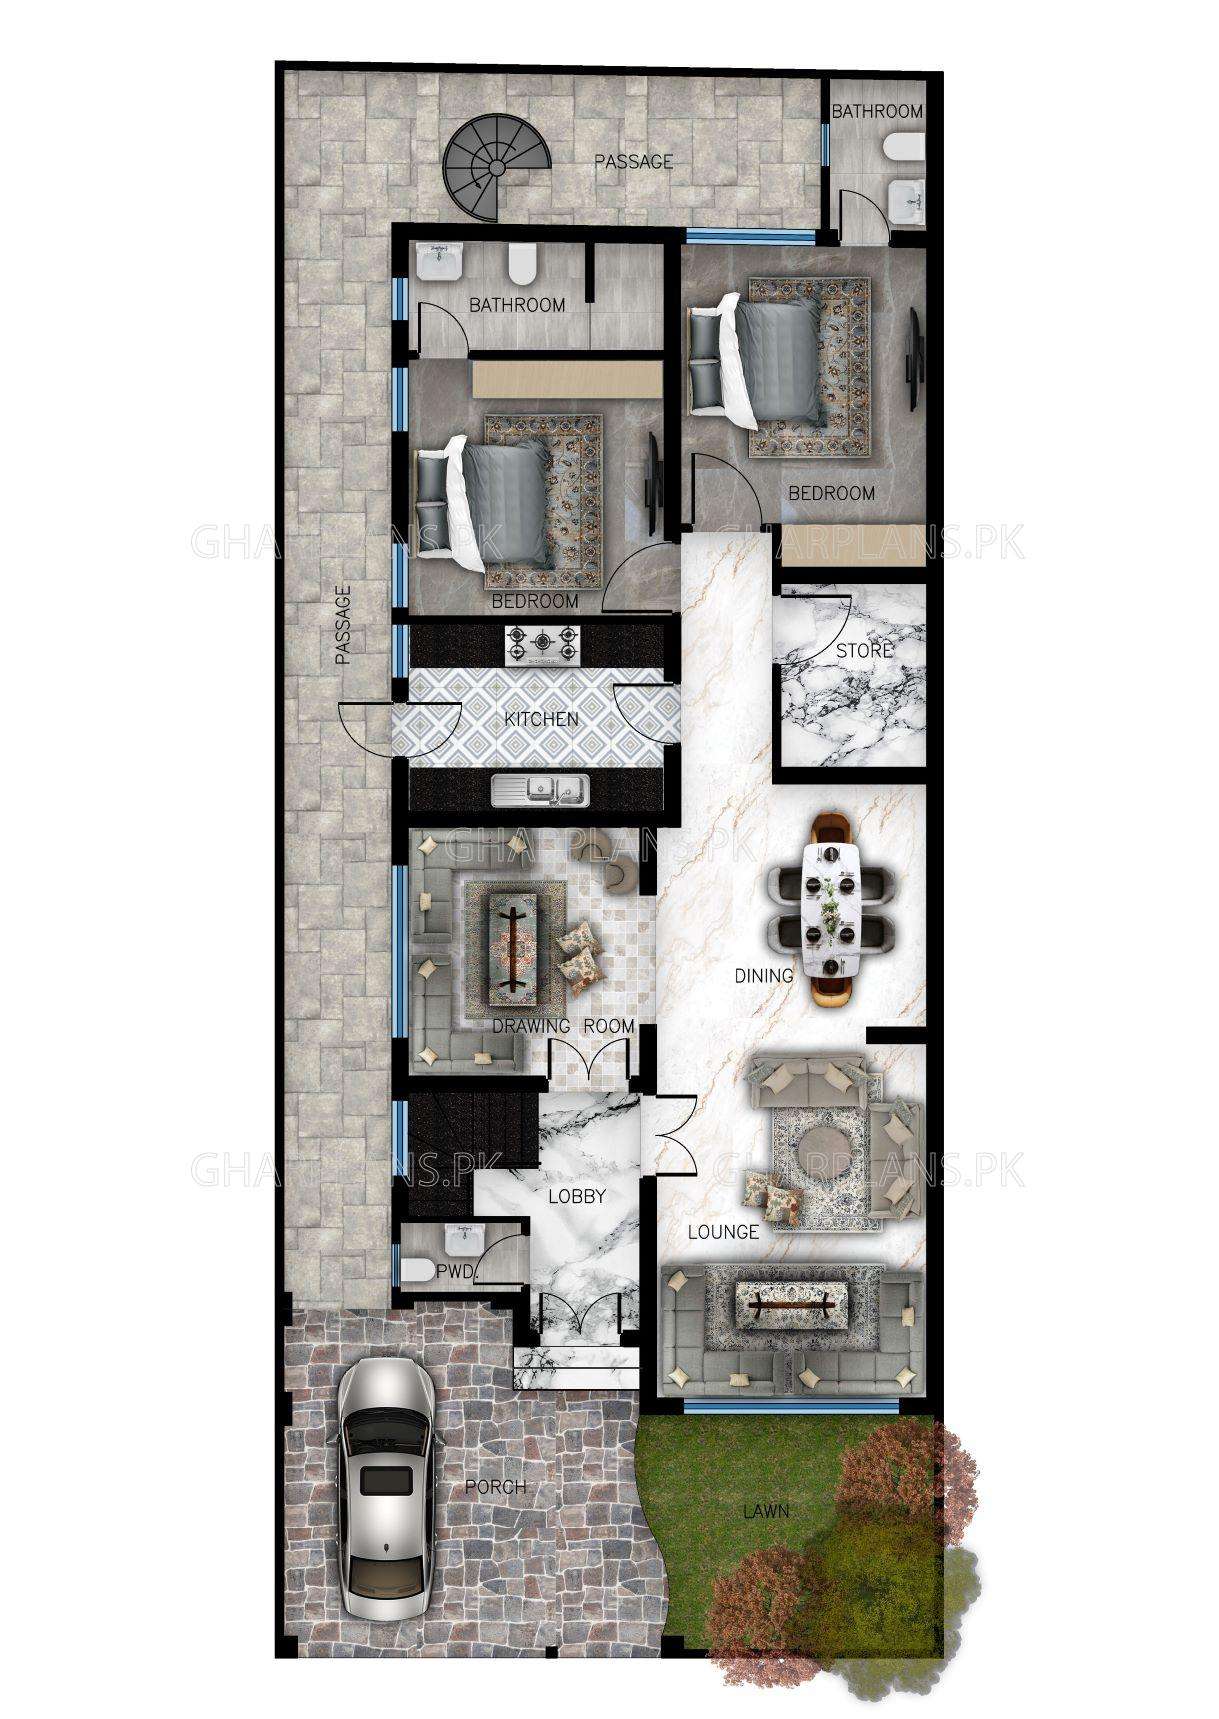 10 Marla house elevation & floor plans